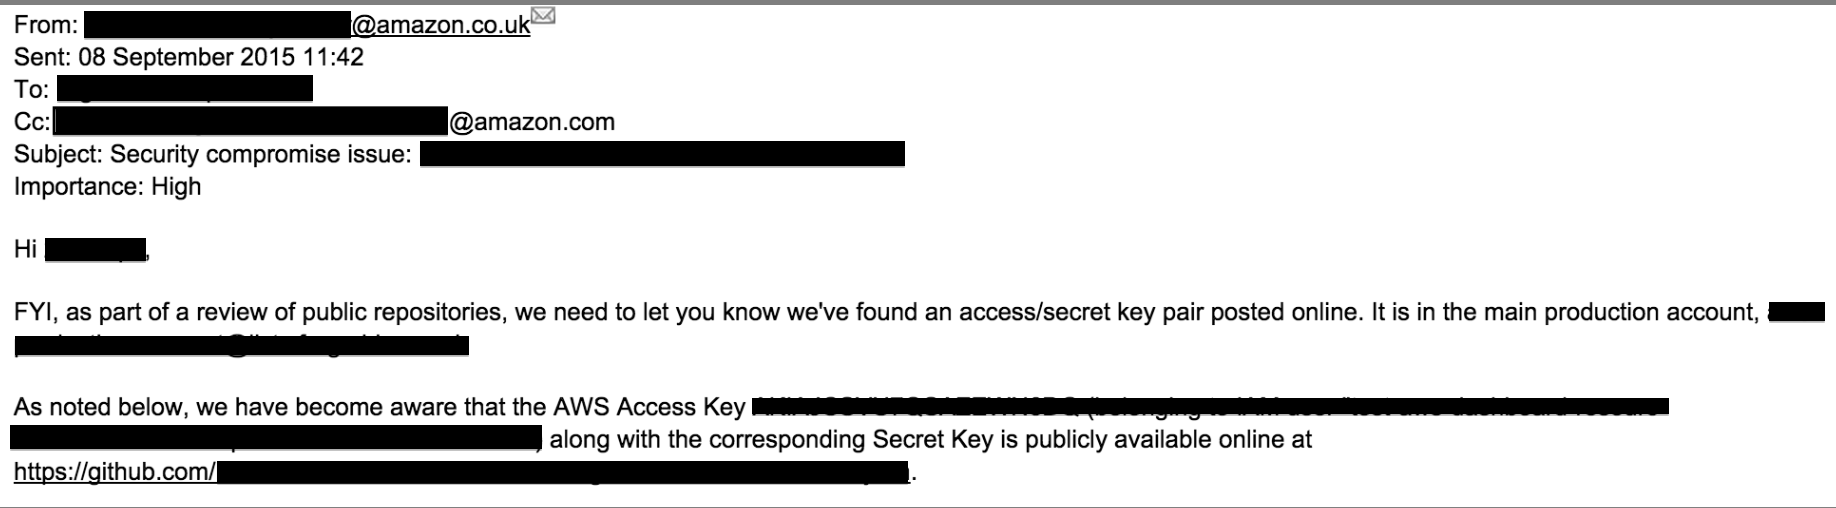 Amazon Security Alert Email